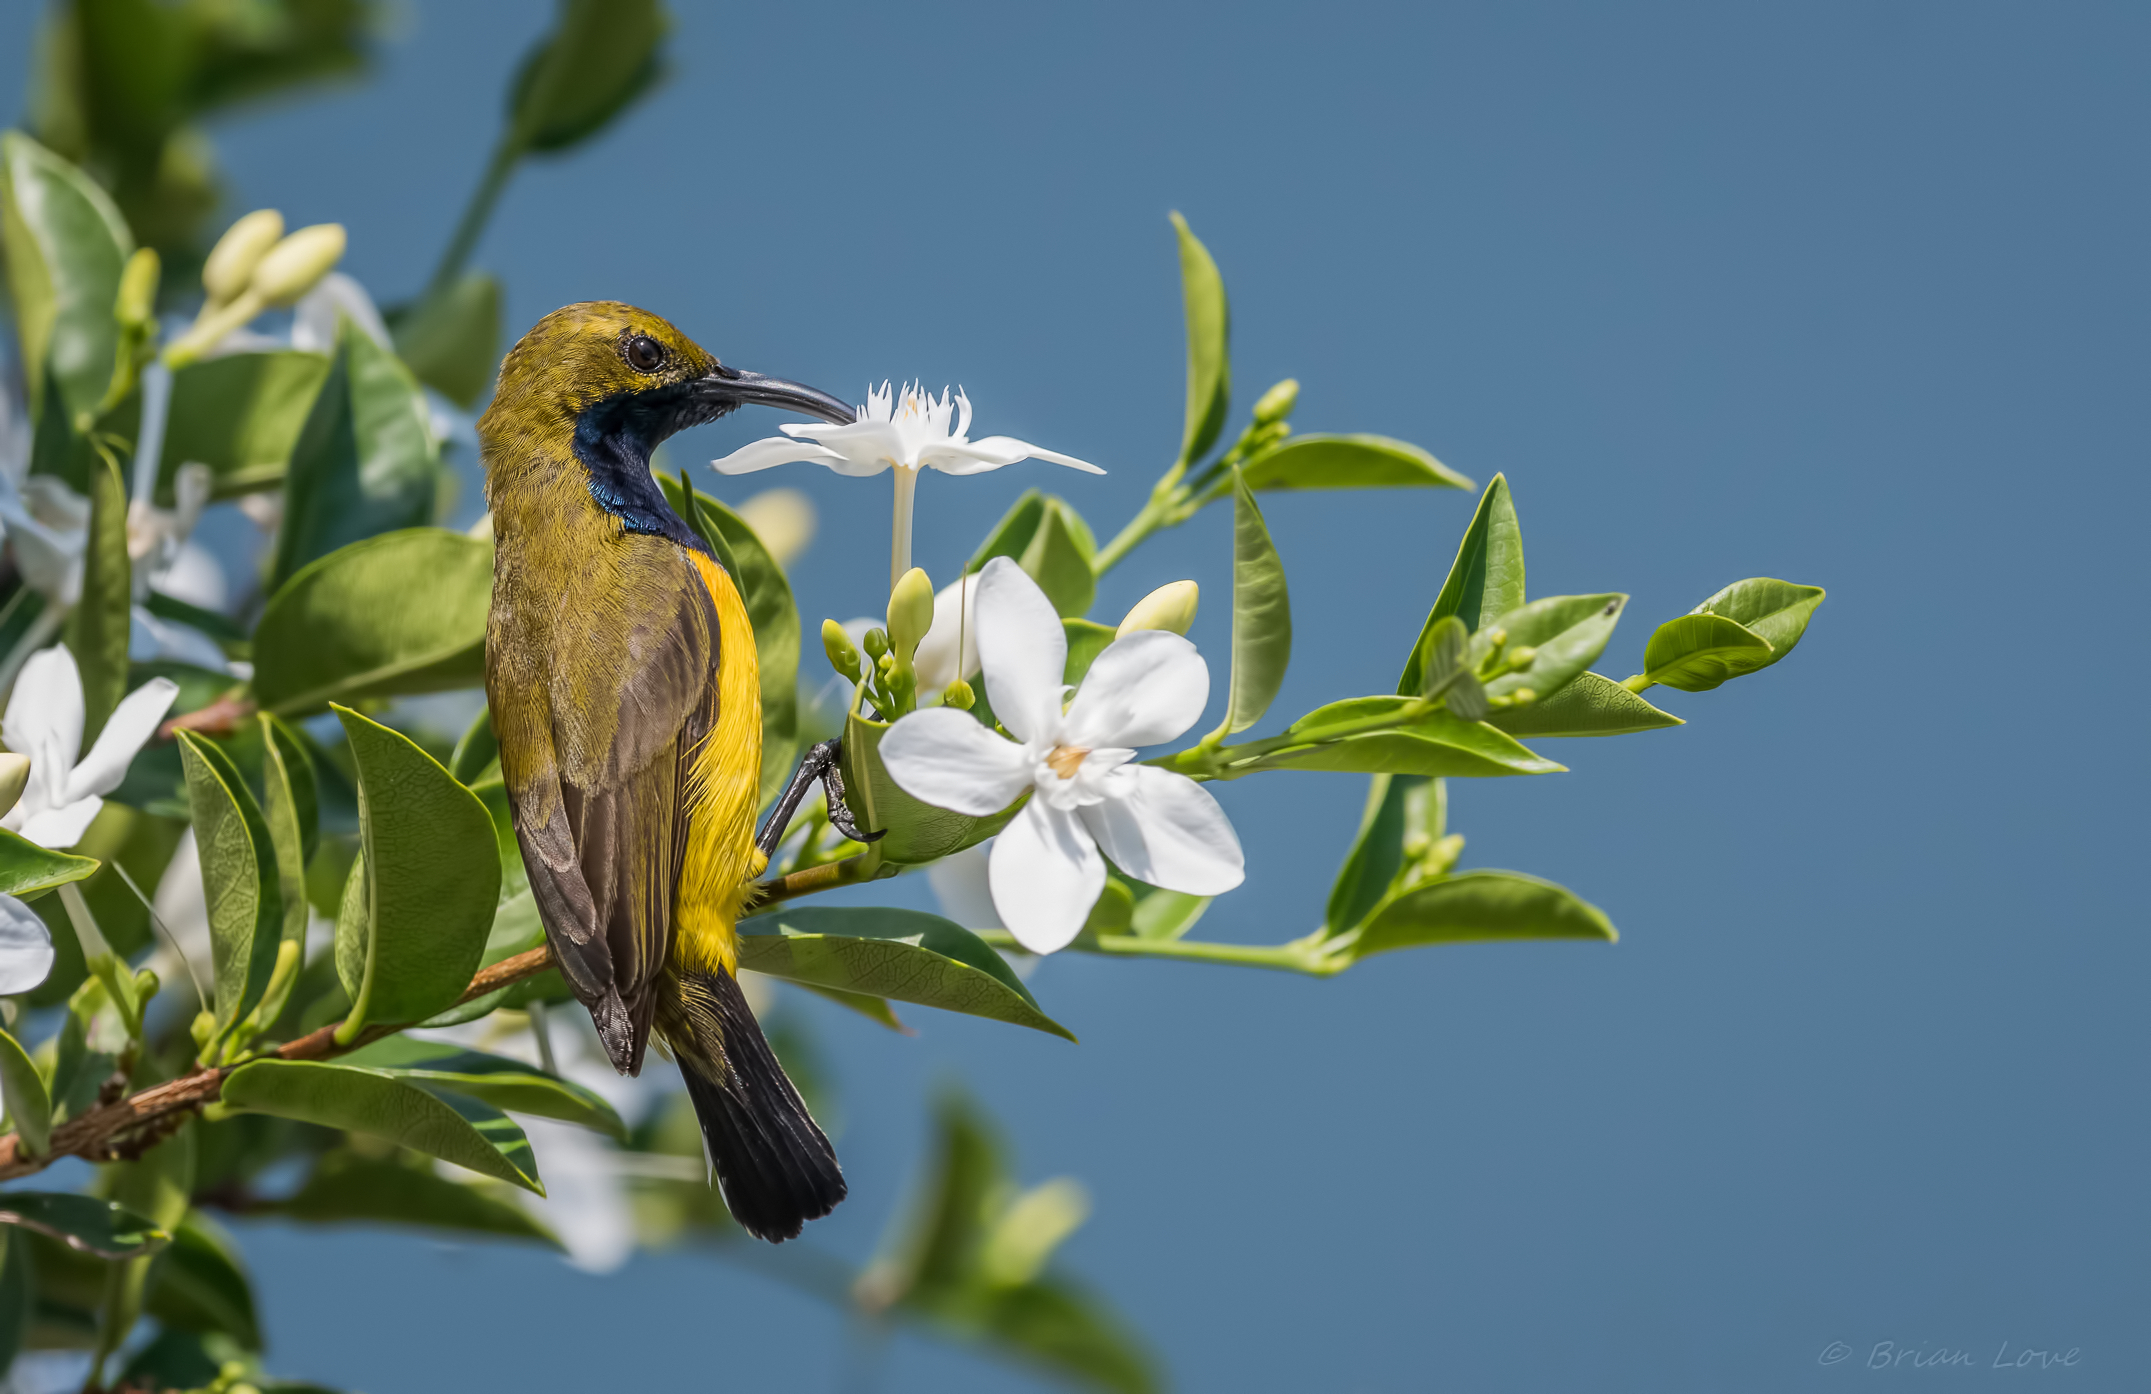 Olive-backed sunbird (Cinnyris jugularis)...